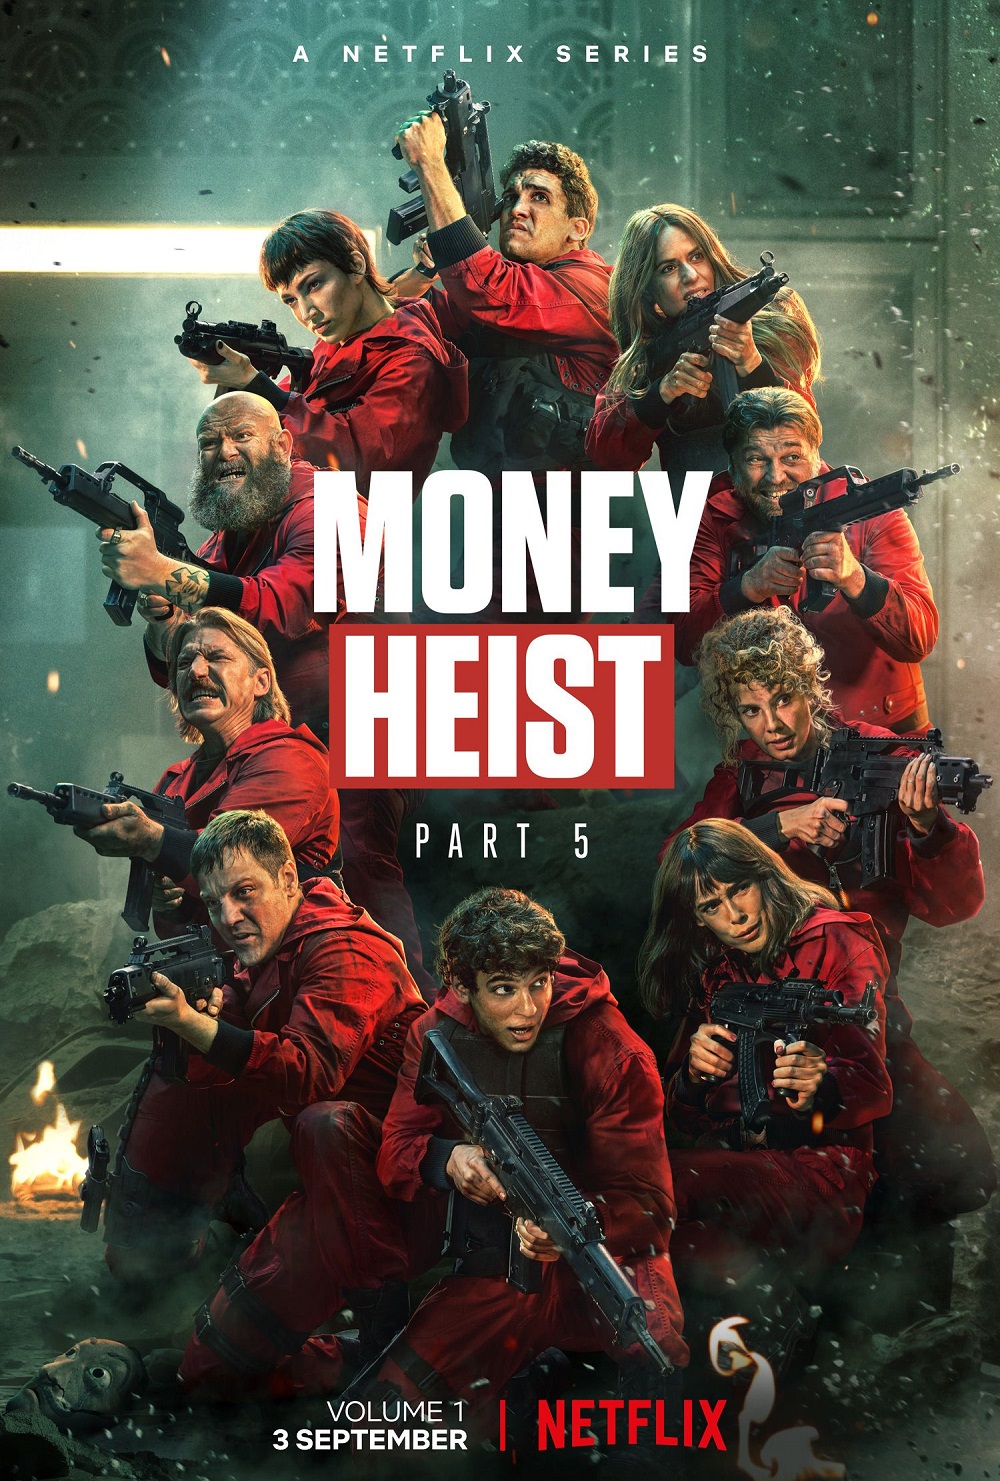 نقد بخش اول فصل 5 سریال Money Heist , بررسی بخش اول فصل 5 سریال Money Heist